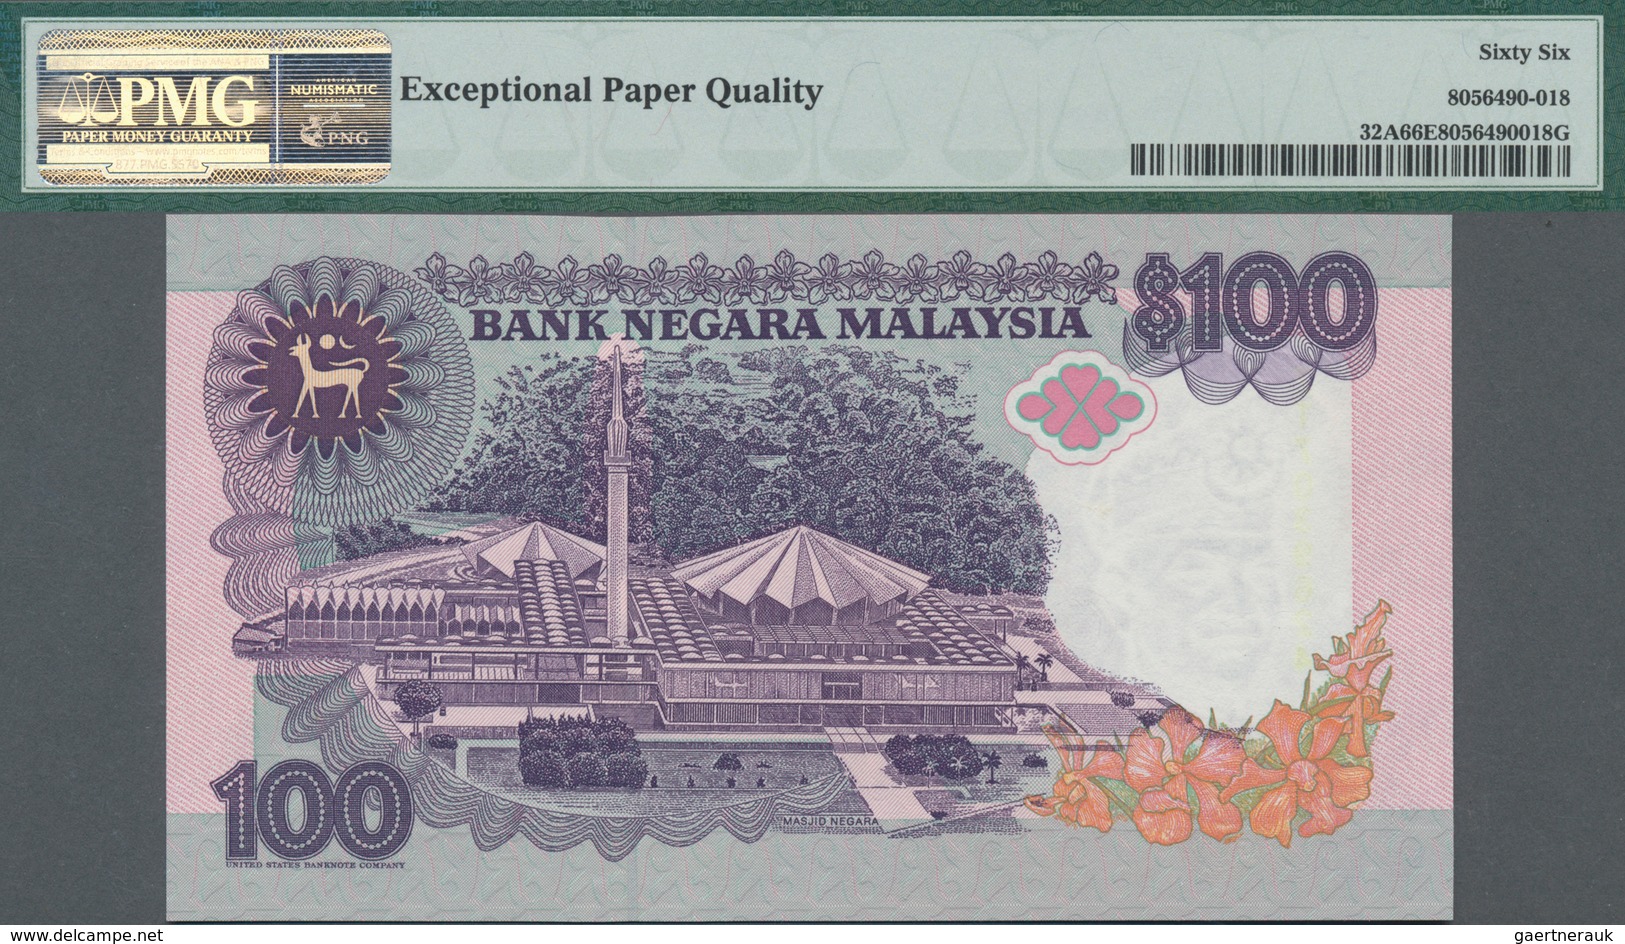 Malaysia: Bank Negara Malaysia Set With 3 Banknotes 20 Ringgit ND(1989) P.30 PMG 66 EPQ, 50 Ringgit - Malaysie